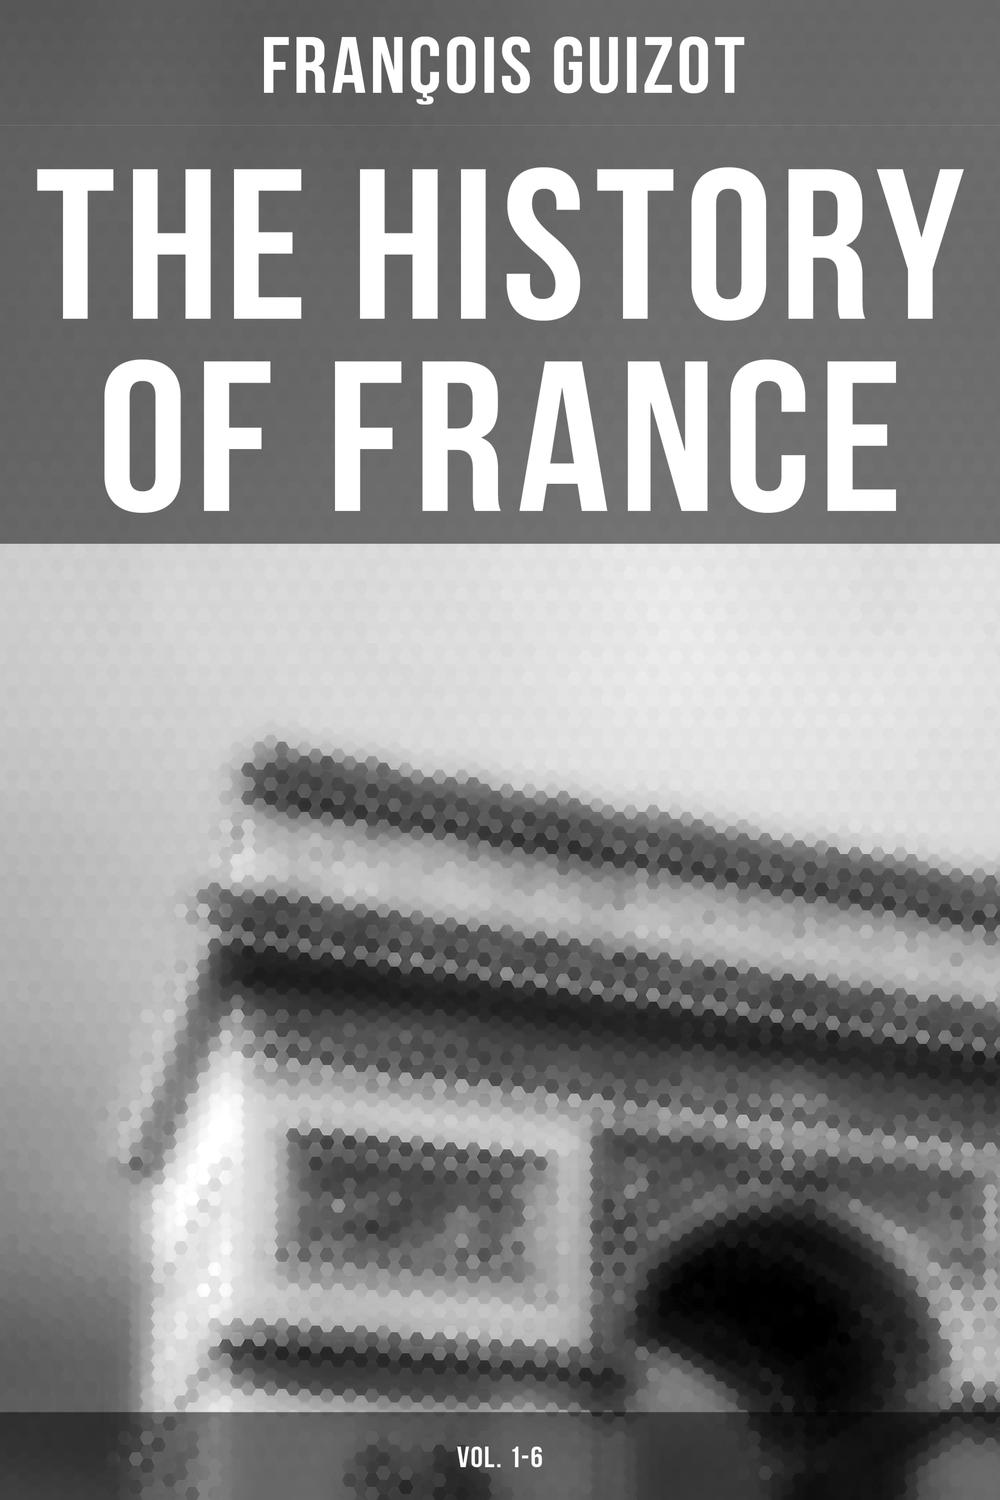 The History of France (Vol. 1-6) - François Guizot, Alphonse Marie de Neuville, Robert Black